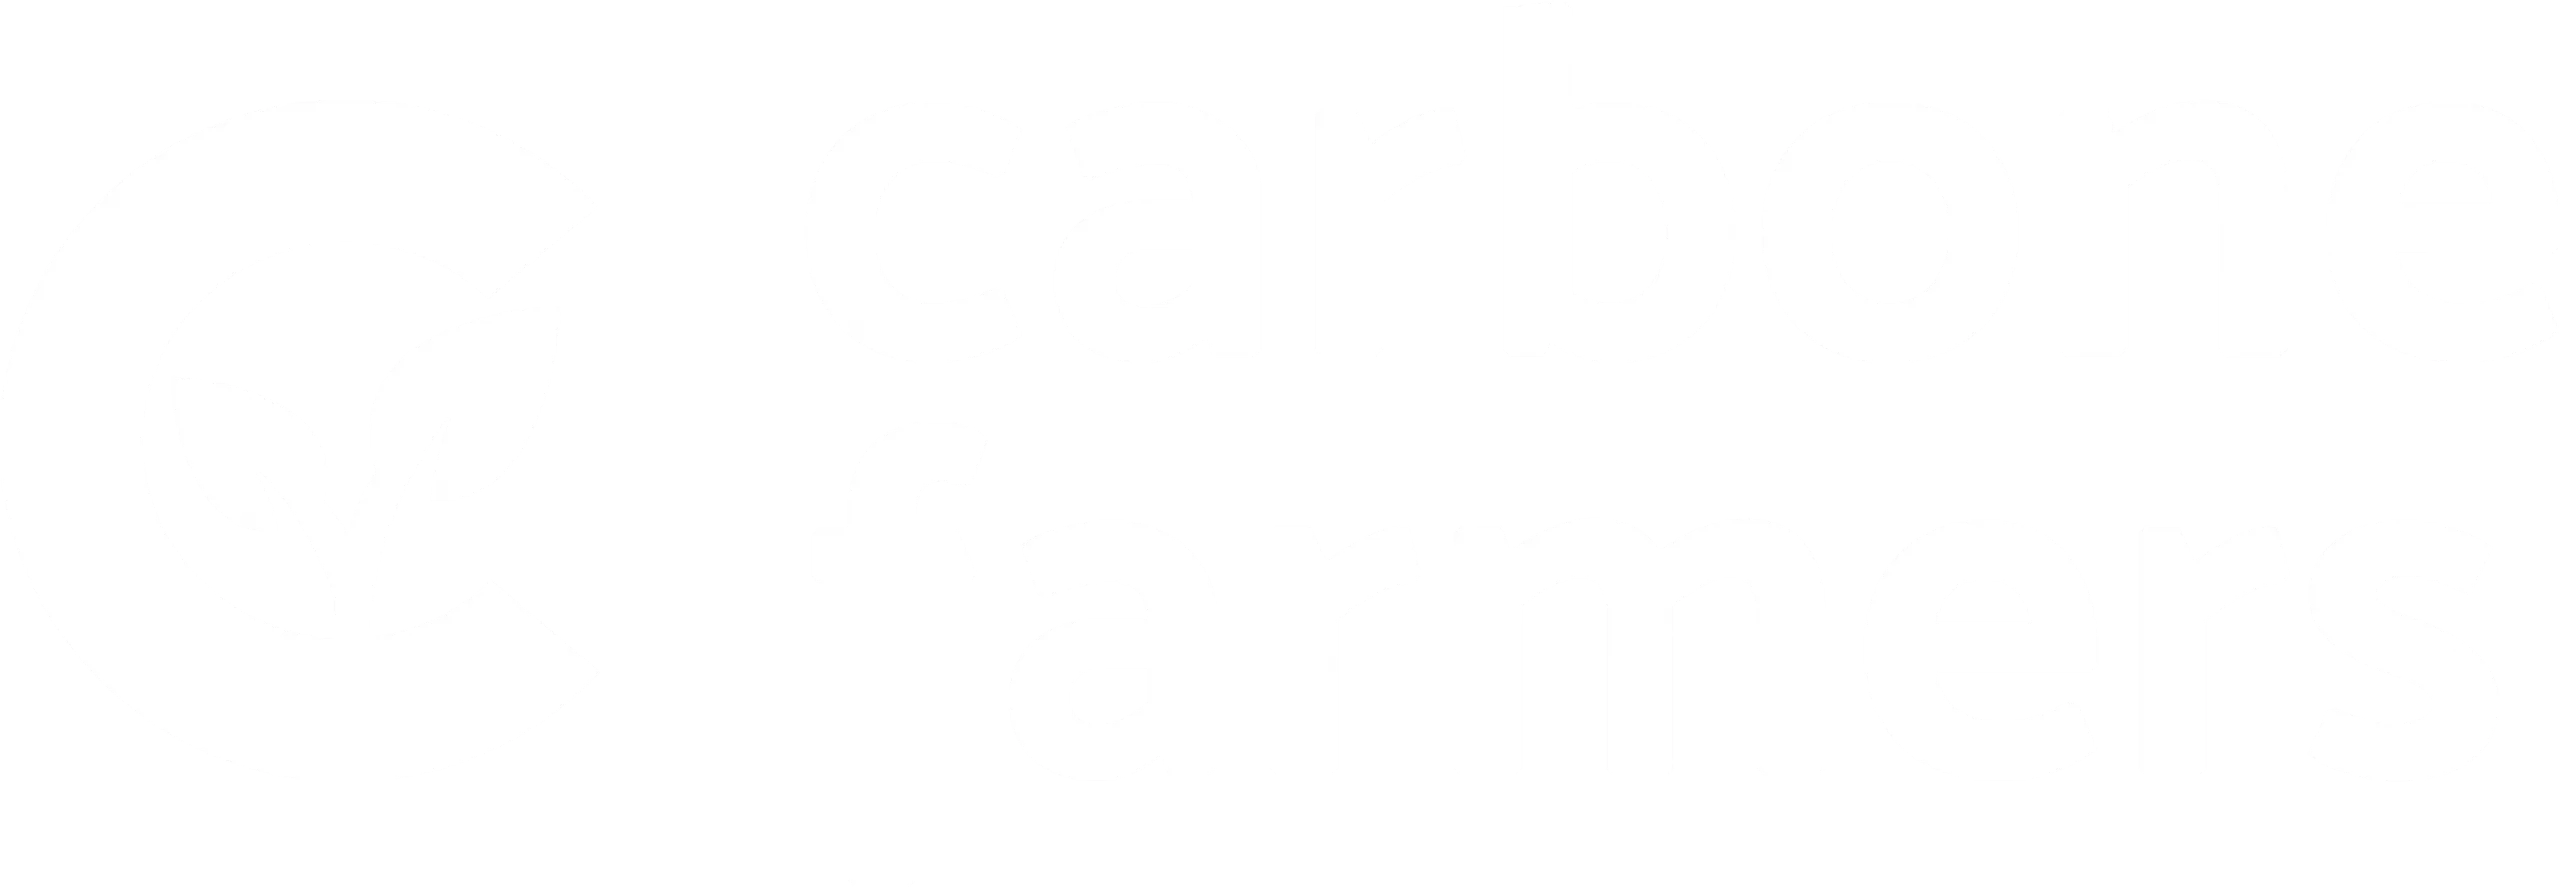 Logo Carbone Farmers blanc